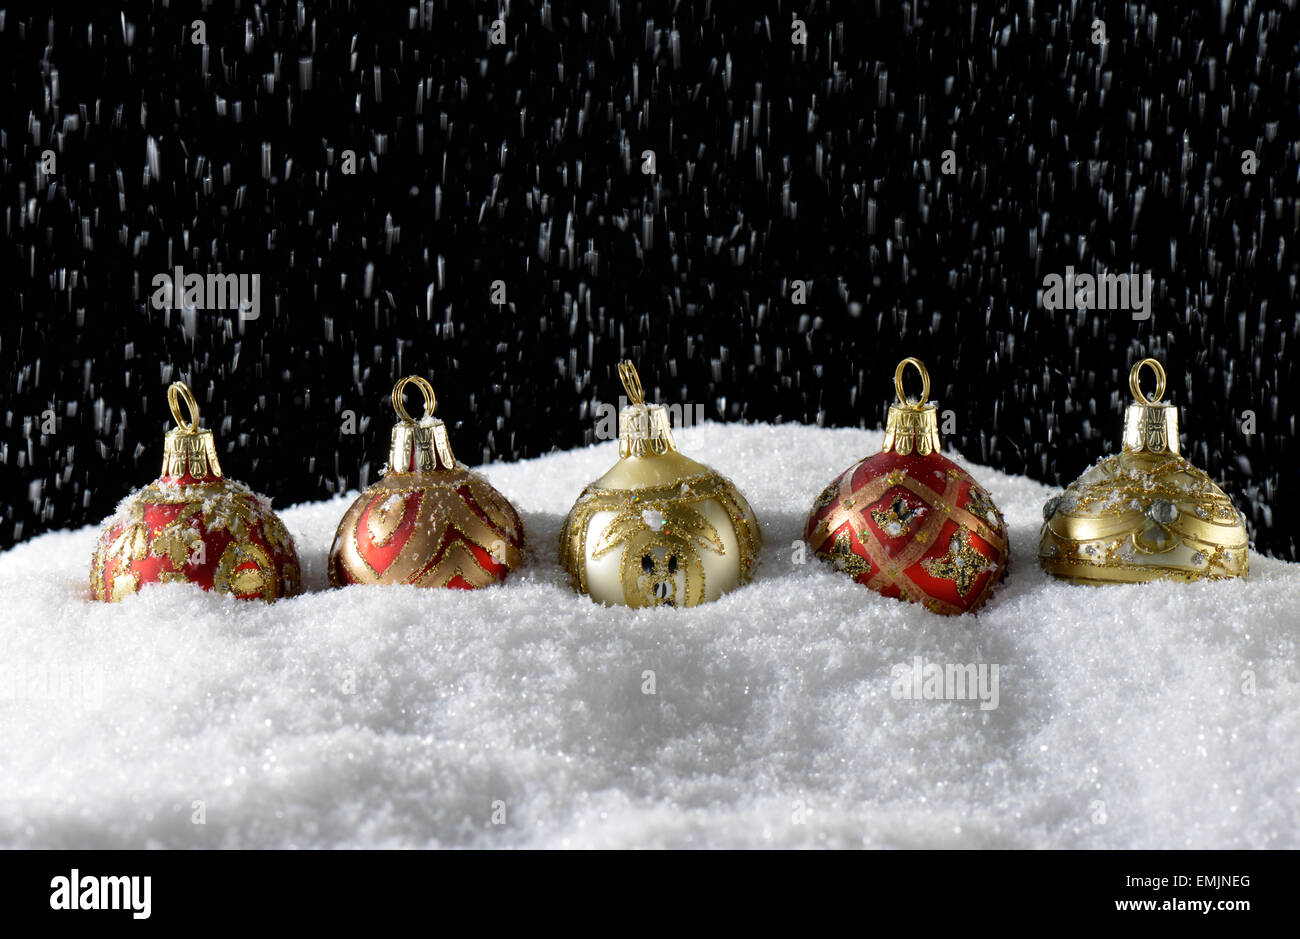 Christmas balls on snow Stock Photo